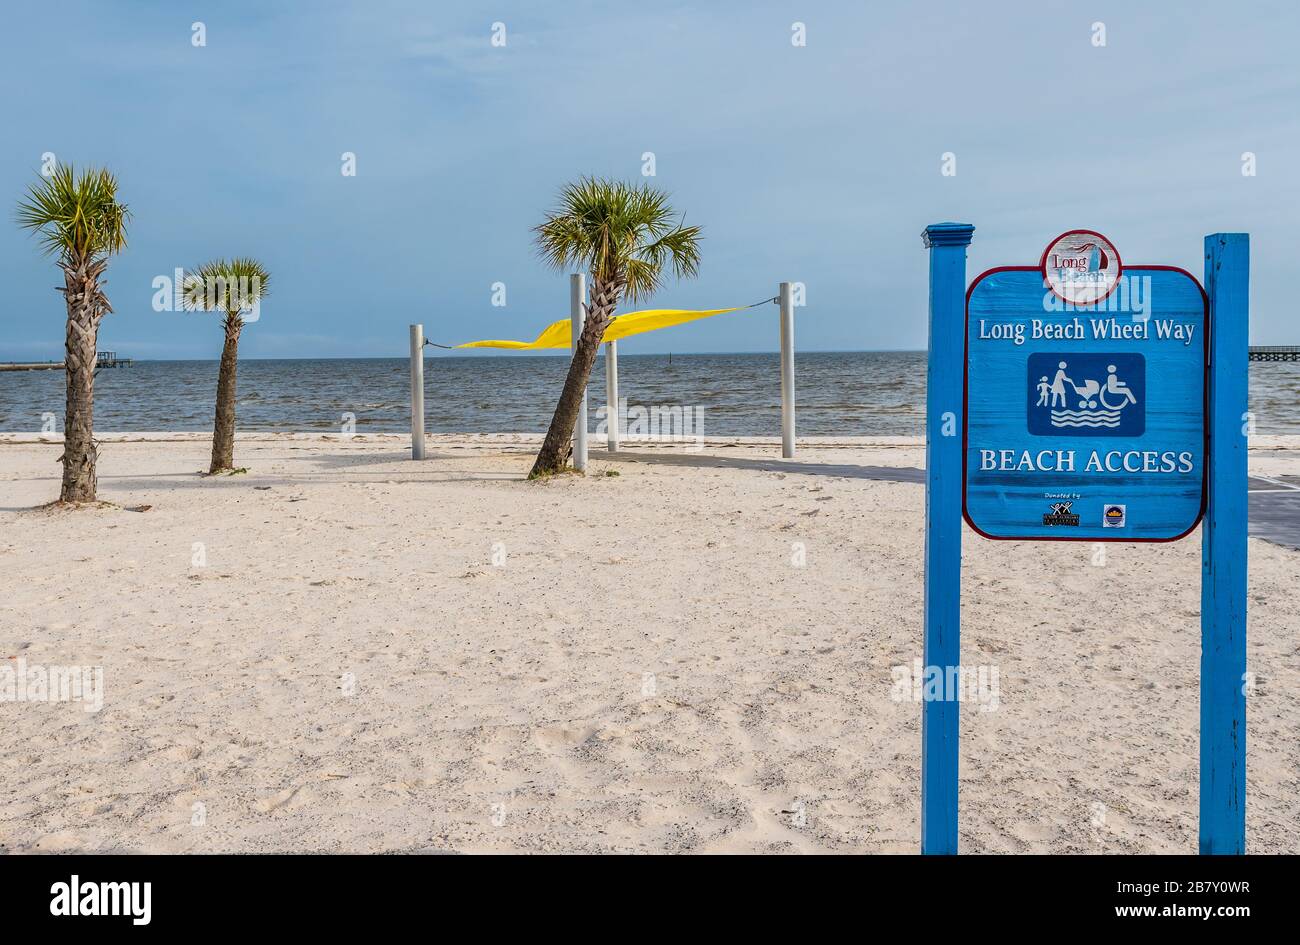 Cartel de playa con acceso para silla de ruedas, Long Beach Mississippi, Estados Unidos. Foto de stock